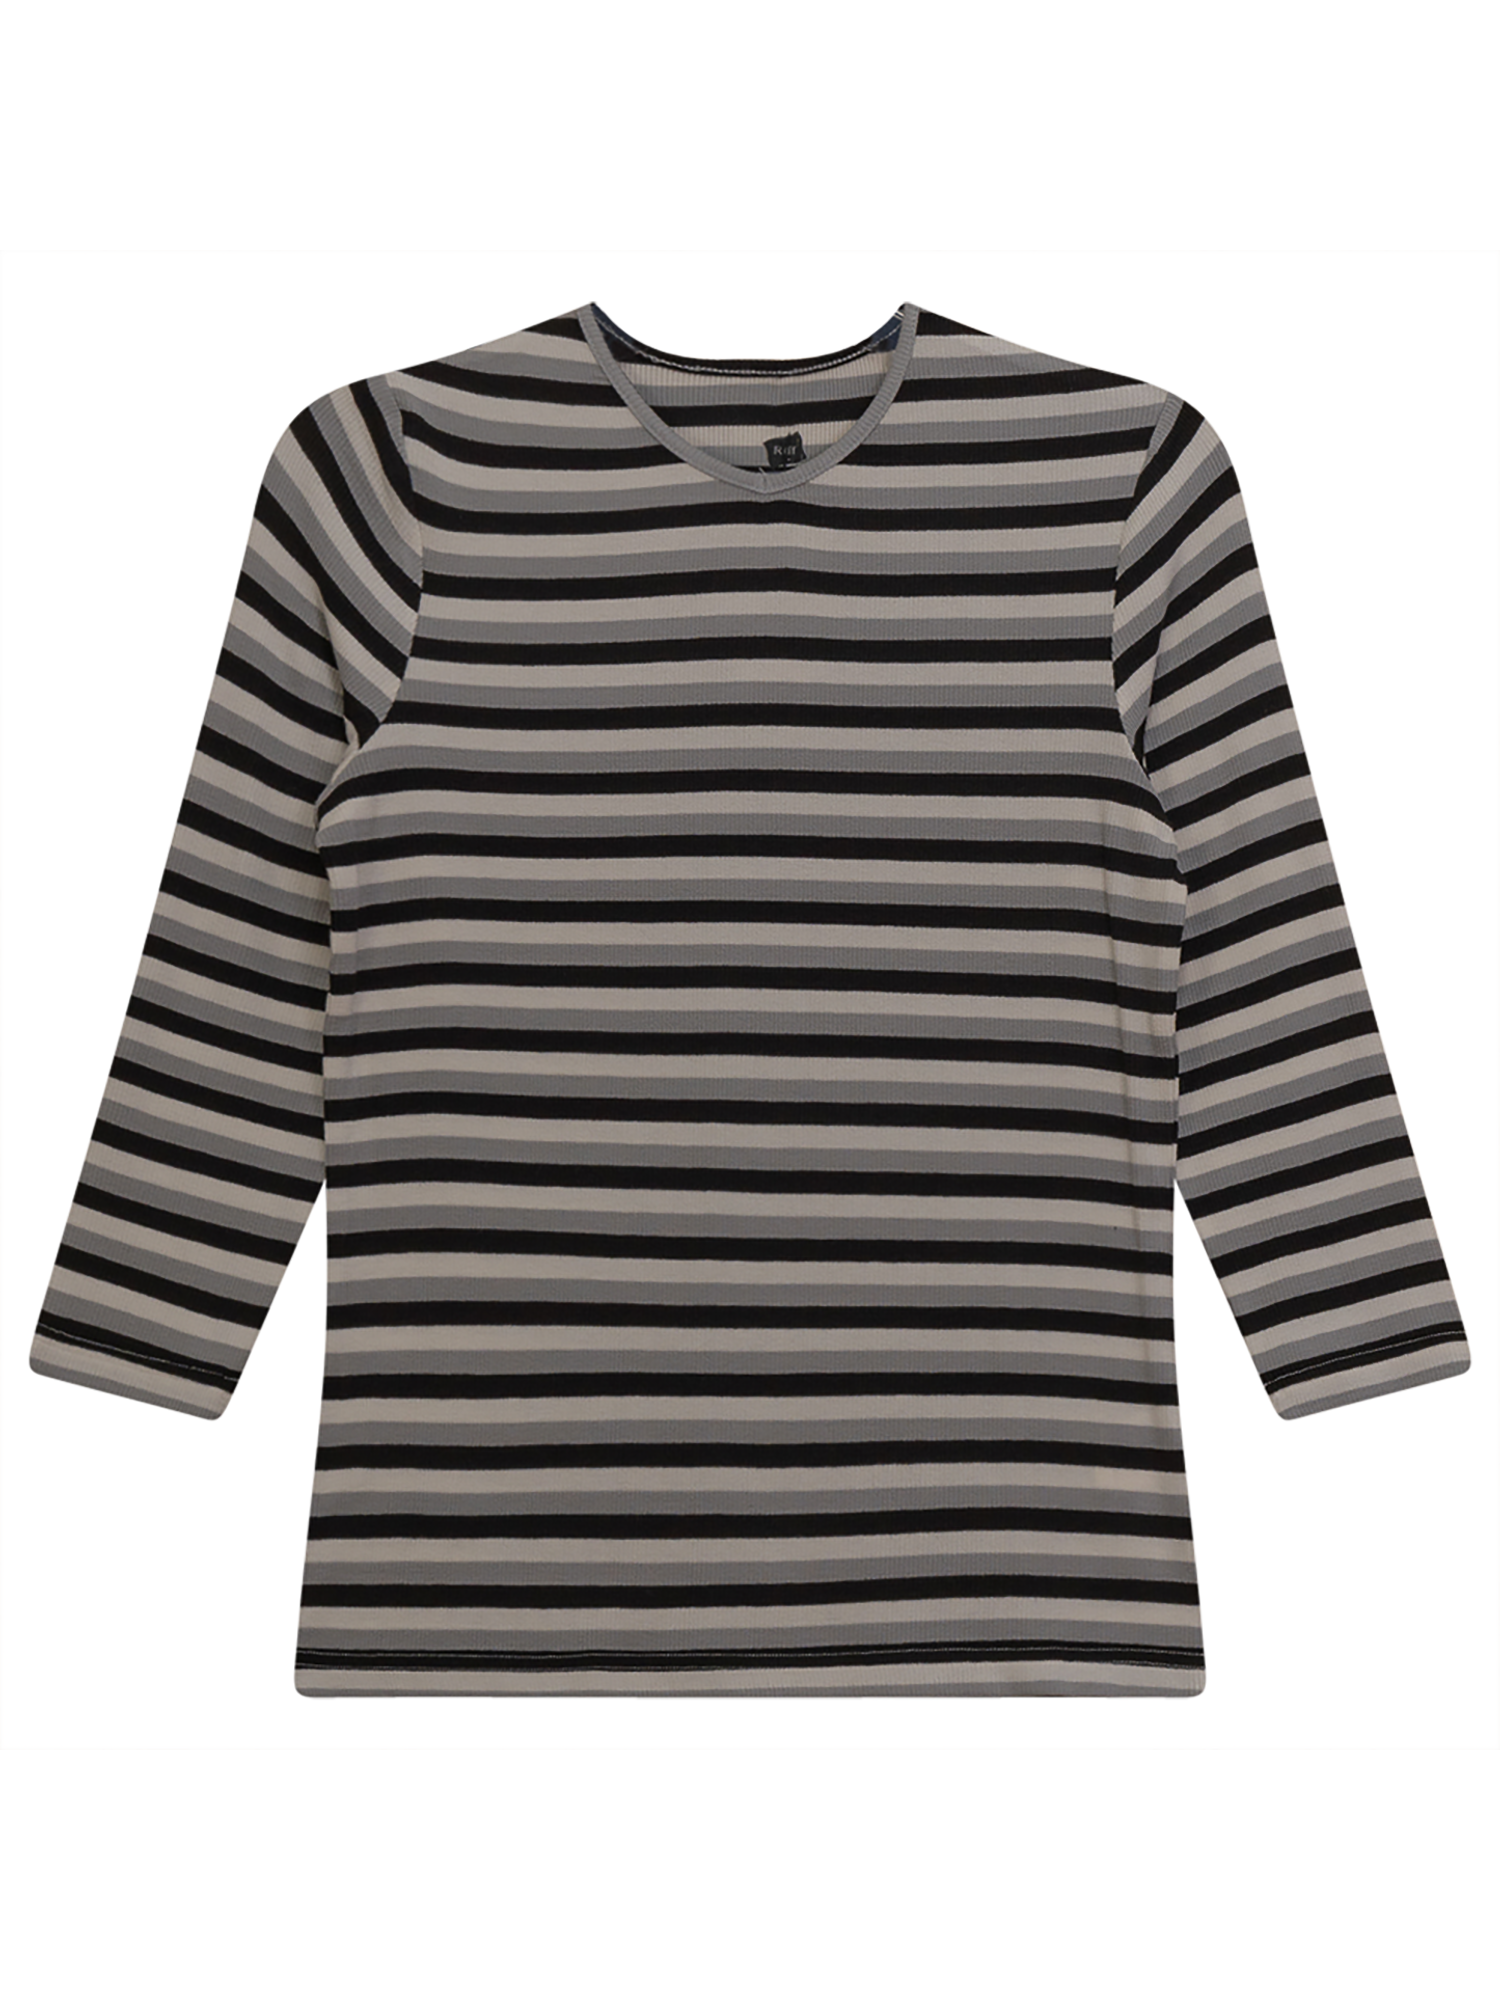 Riff Ribbed Striped 3/4 Sleeve V-Neck Tee - Shirts & Tops -  PinkOrchidFashion